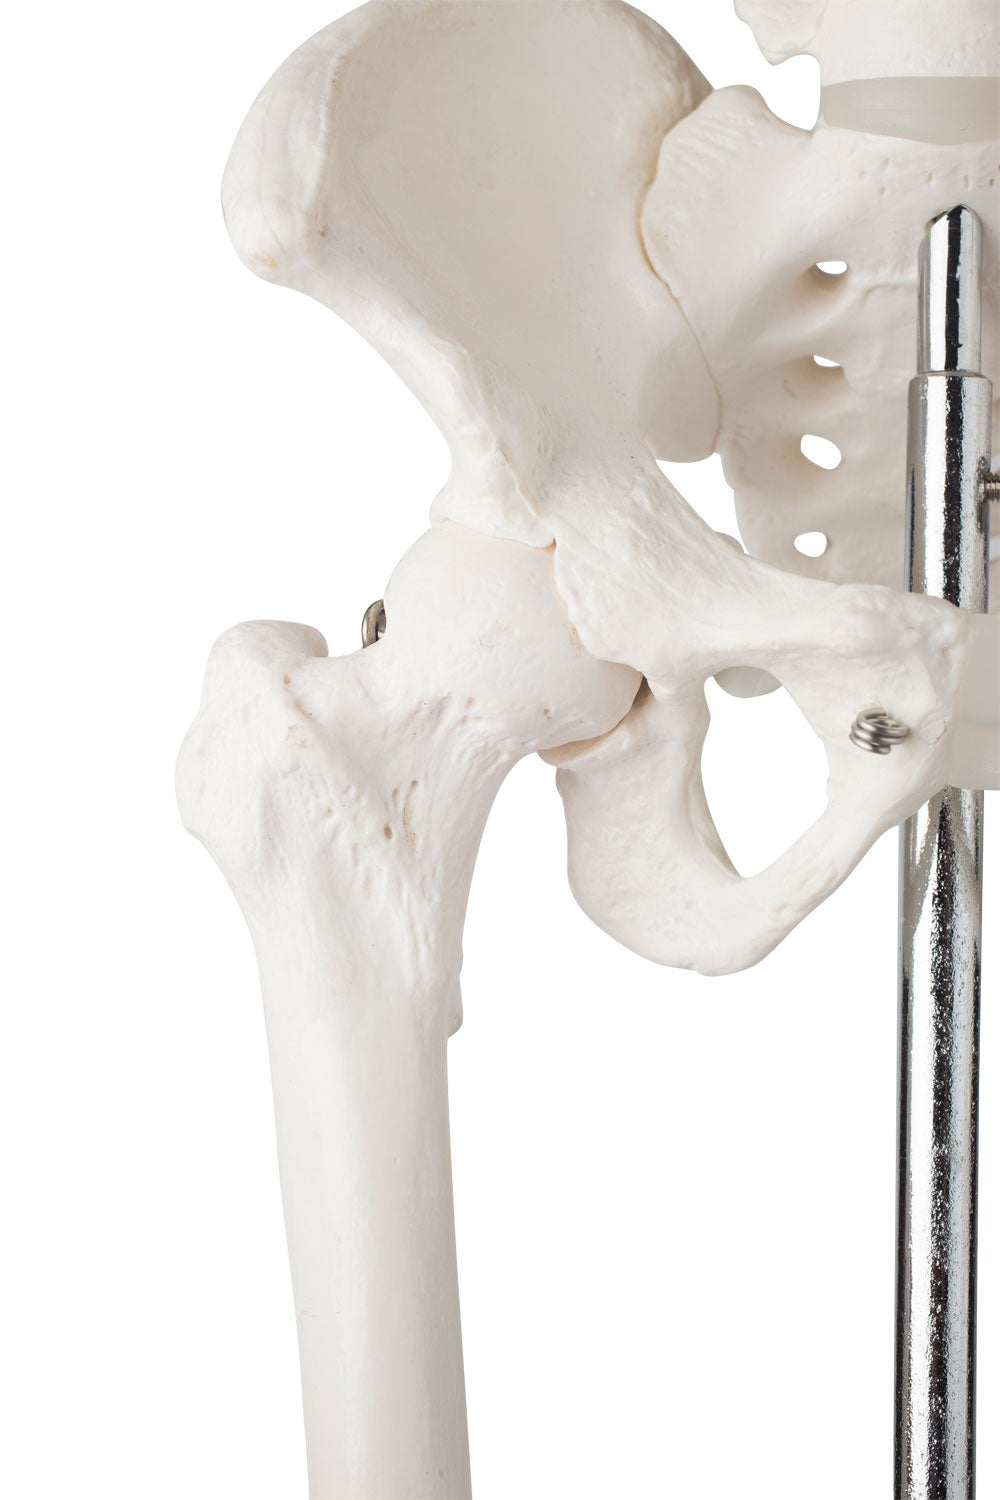 Skeletmodel på 85 cm med høj detaljegrad